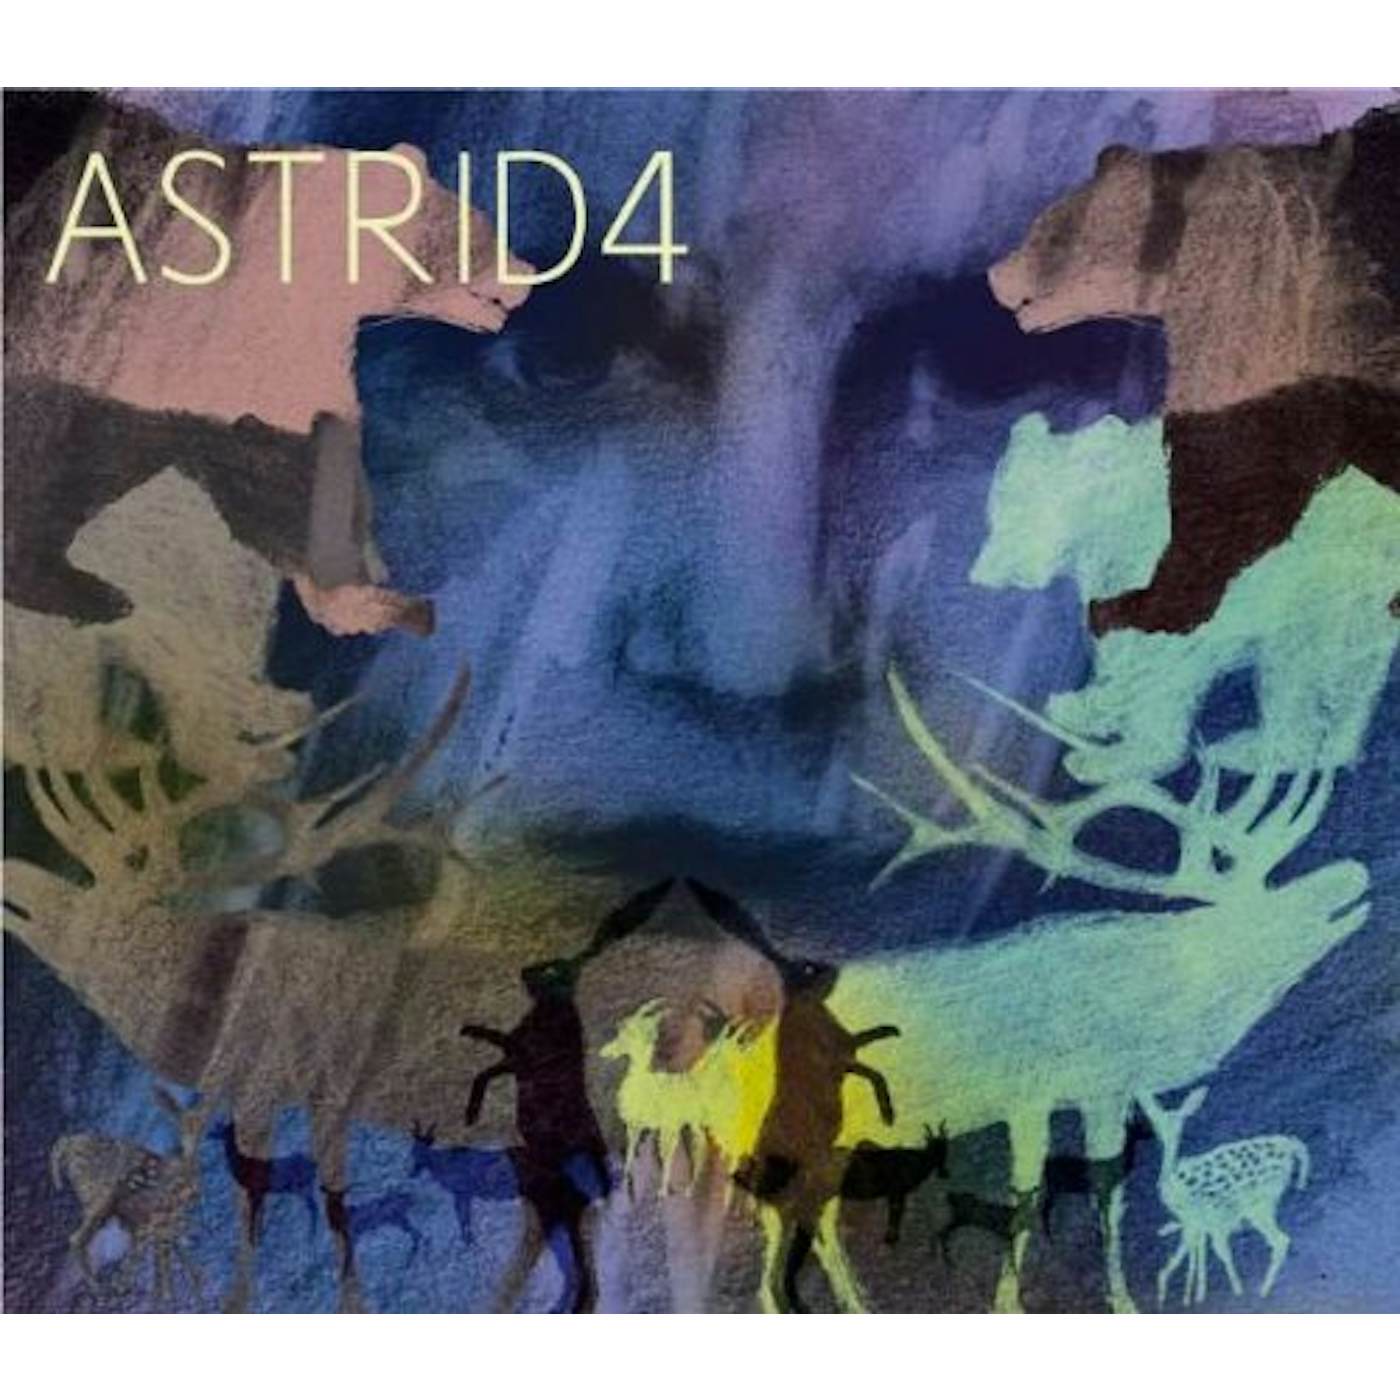 Astrid Swan Astrid4 Vinyl Record